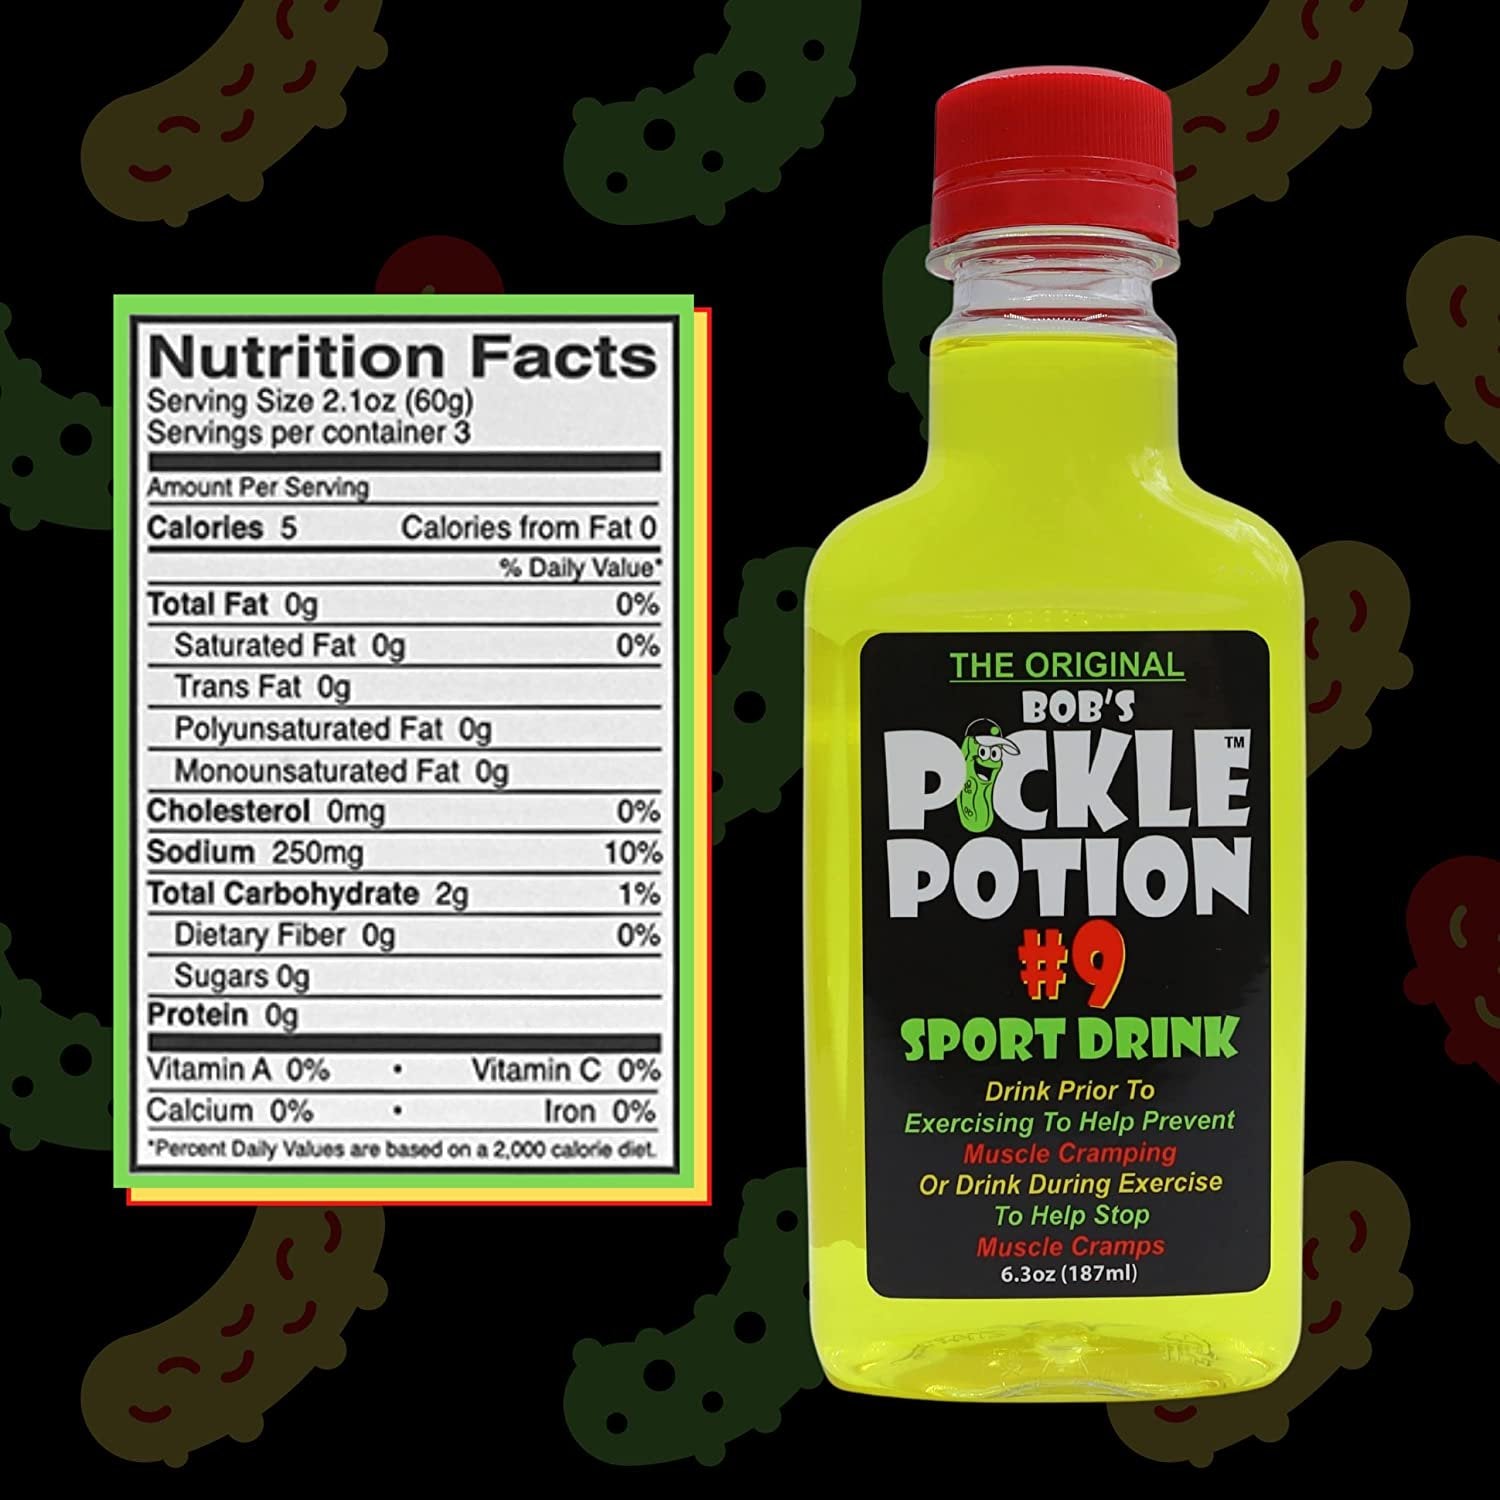 Bob's Pickle Potion #9 Sport Drink - 6.3 Oz 187ml - 12 Pack of Pickle Juice Bottles - Sports Drink for Post or Pre Workout - Muscle Cramp Support Pickle Juice Drink